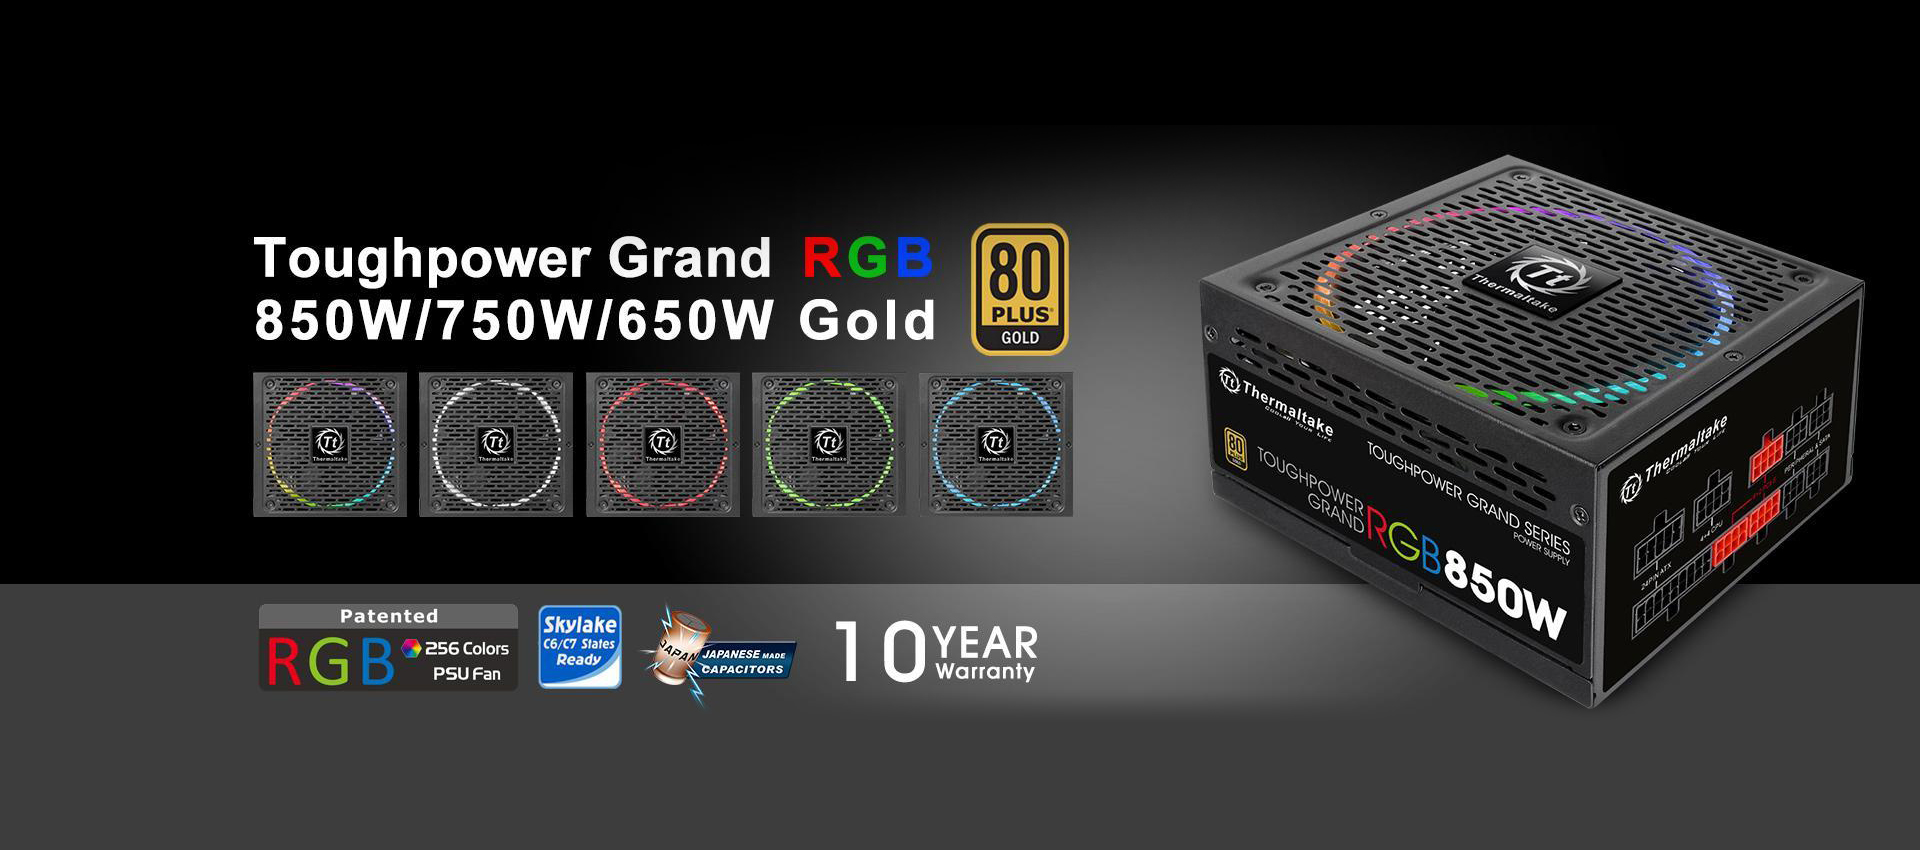 Toughpower Grand RGB 850W Gold Fully Modular